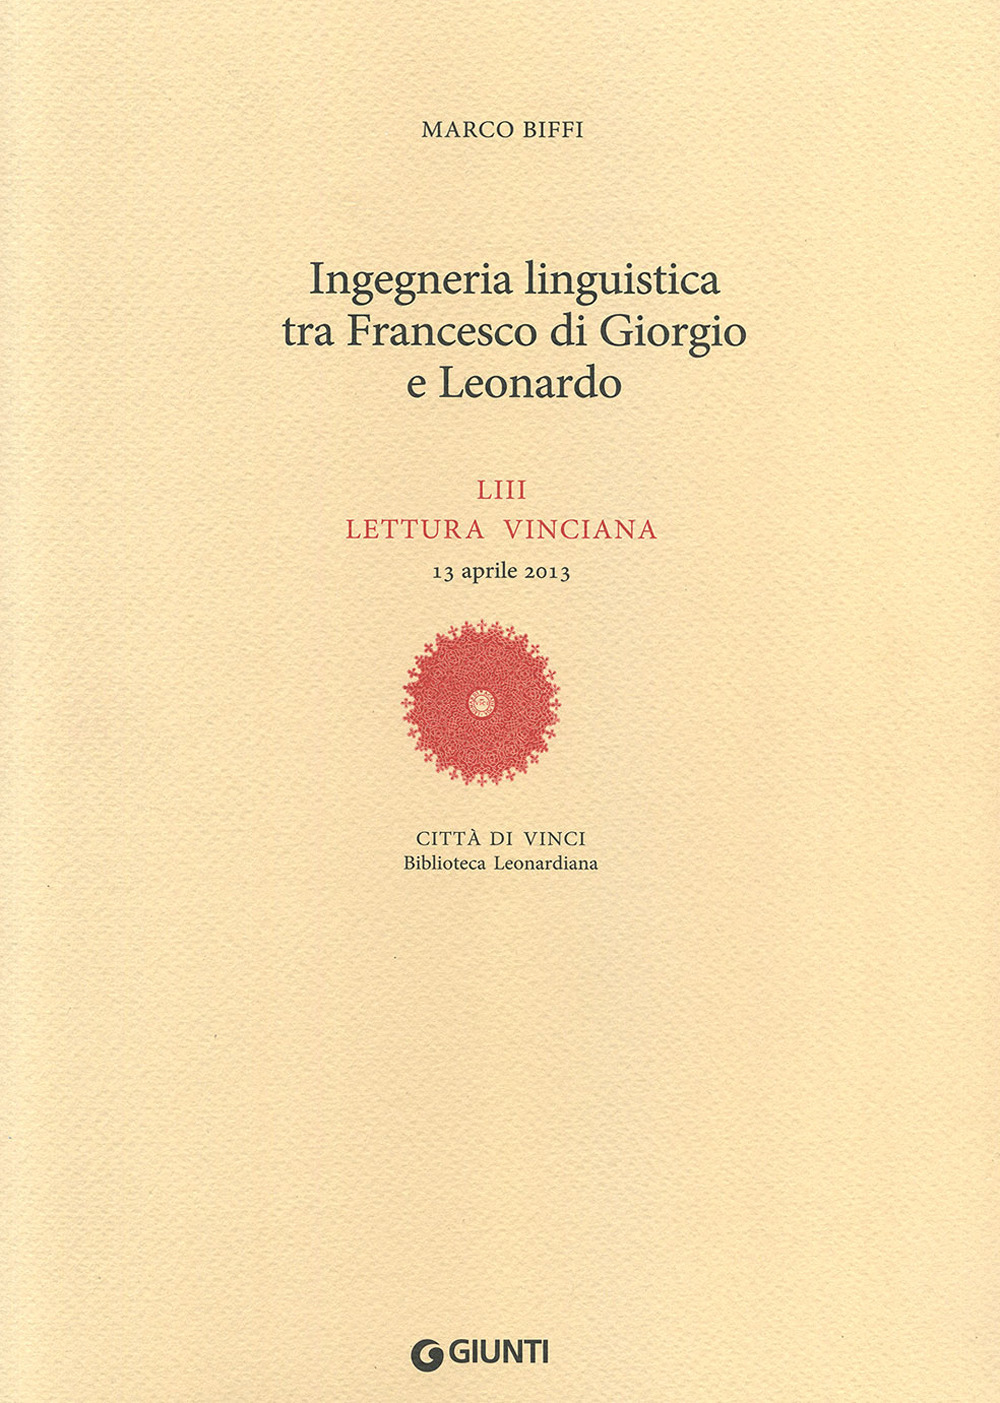 Image of Ingegneria linguistica tra Francesco di Giorgio e Leonardo. LIII lettura vinciana